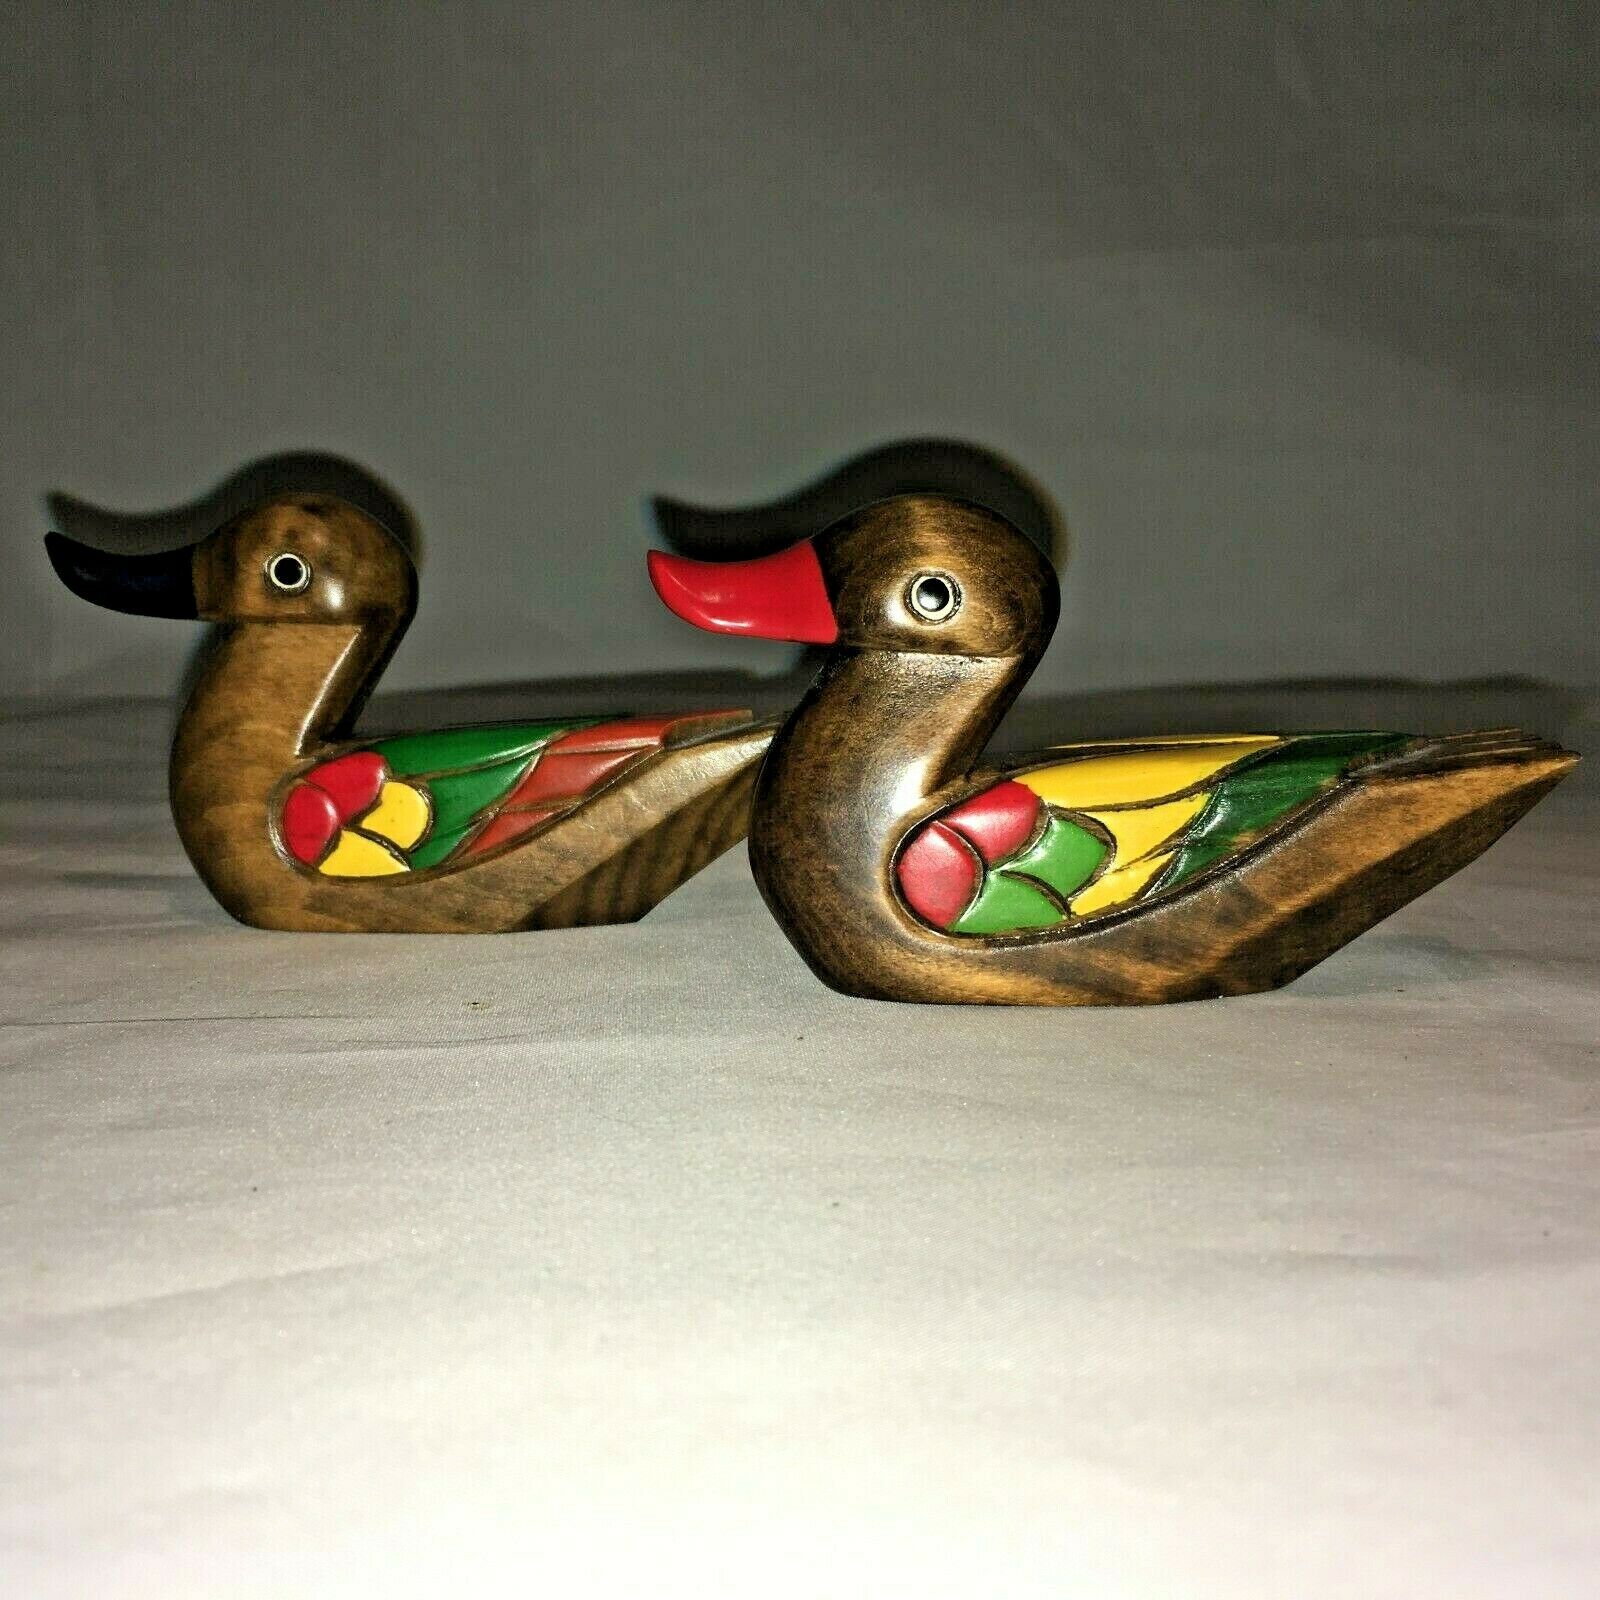 2 Vintage Carved, Painted Wooden Ducks Folk Art Rustic Simplistic Not Realistic